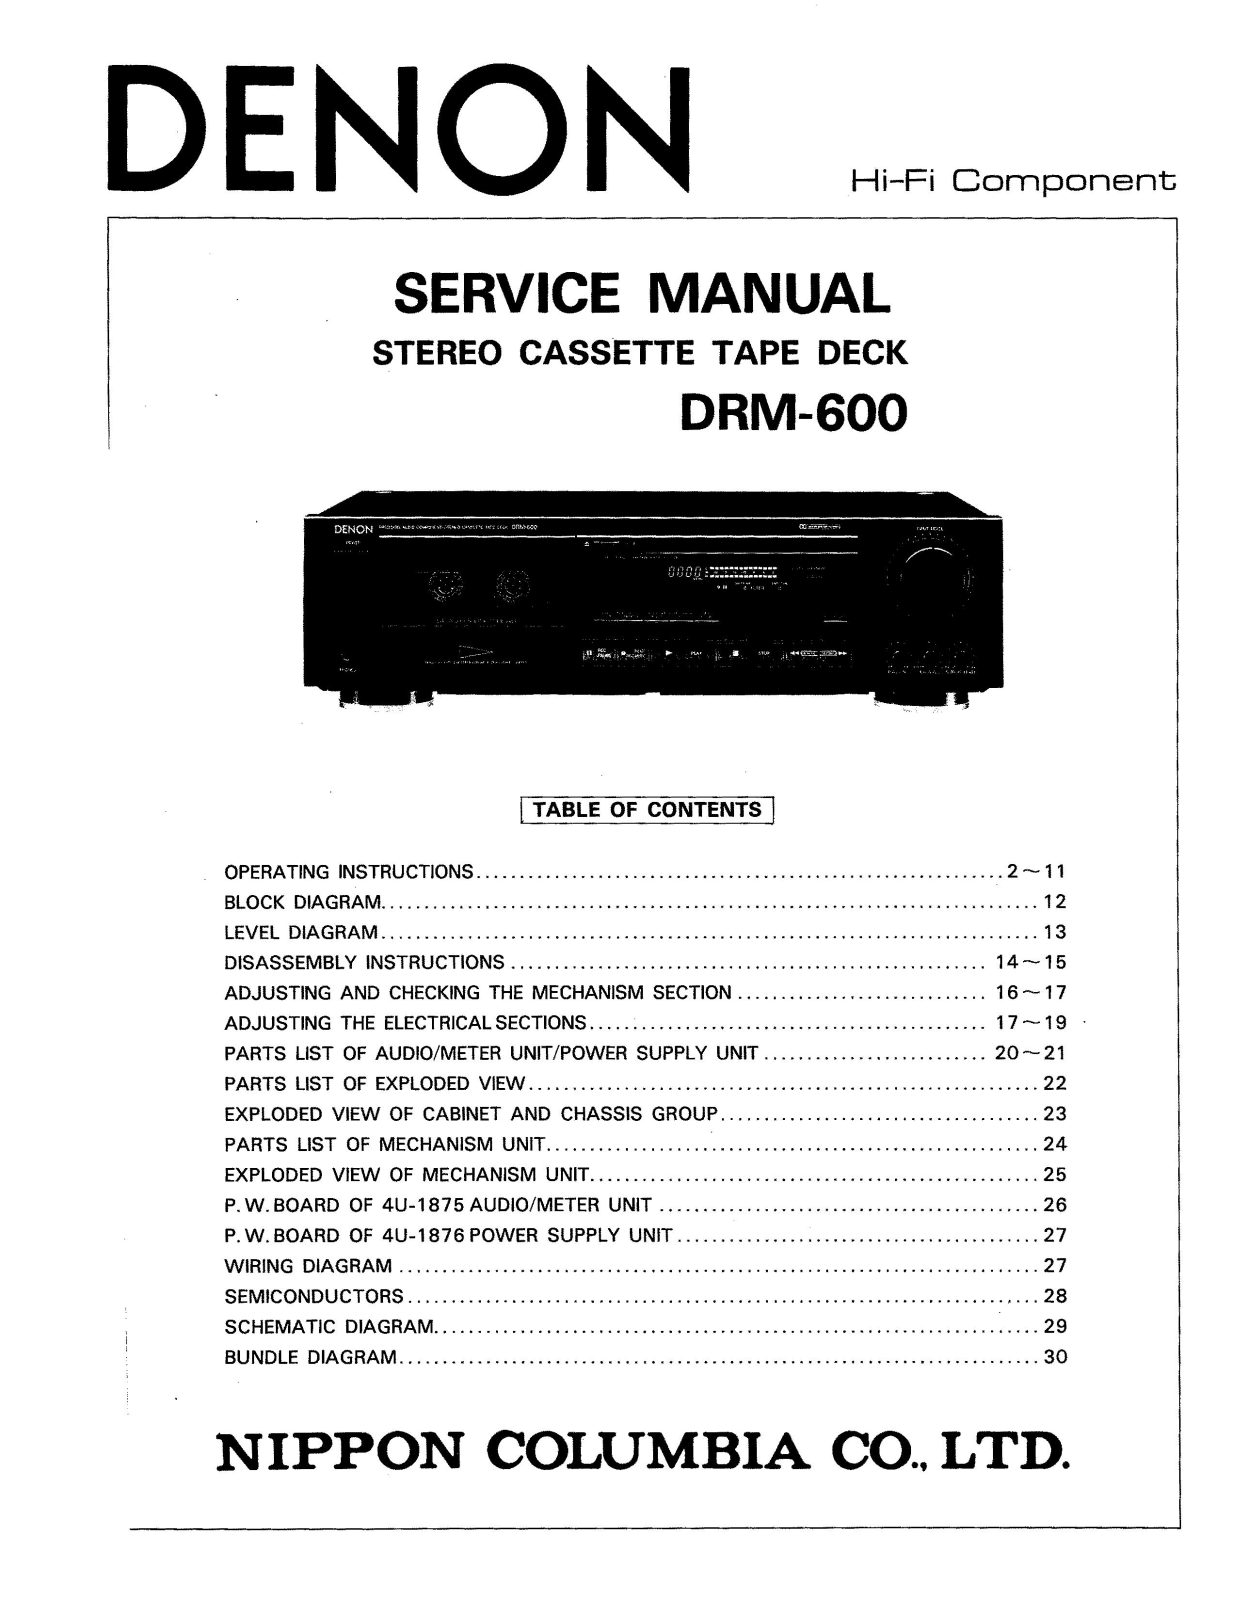 Denon DRM-600 Service Manual